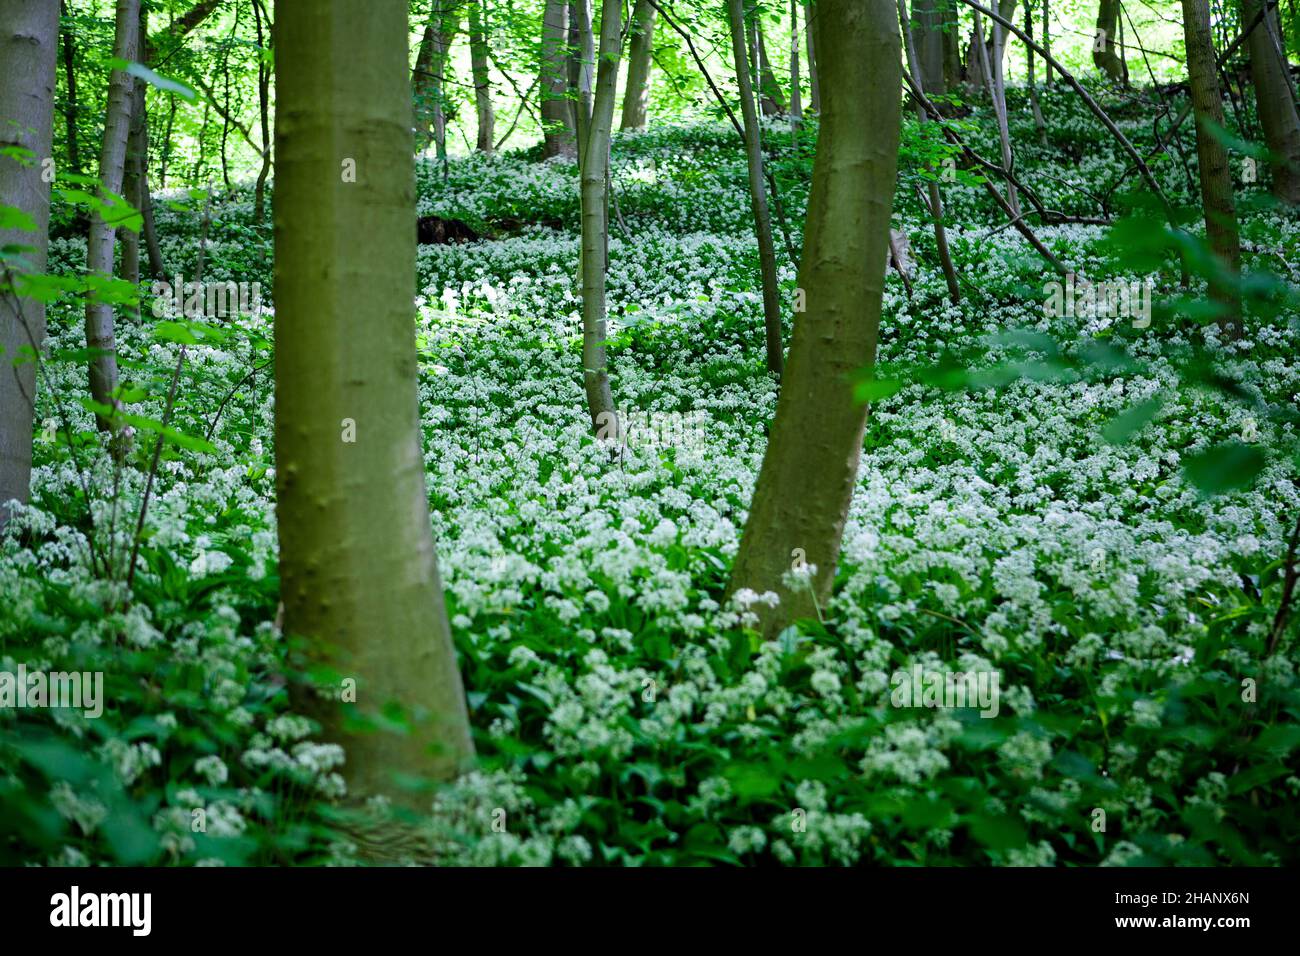 Allium ursinum or wild garlic covers the forest floor, Germany, Europe Stock Photo